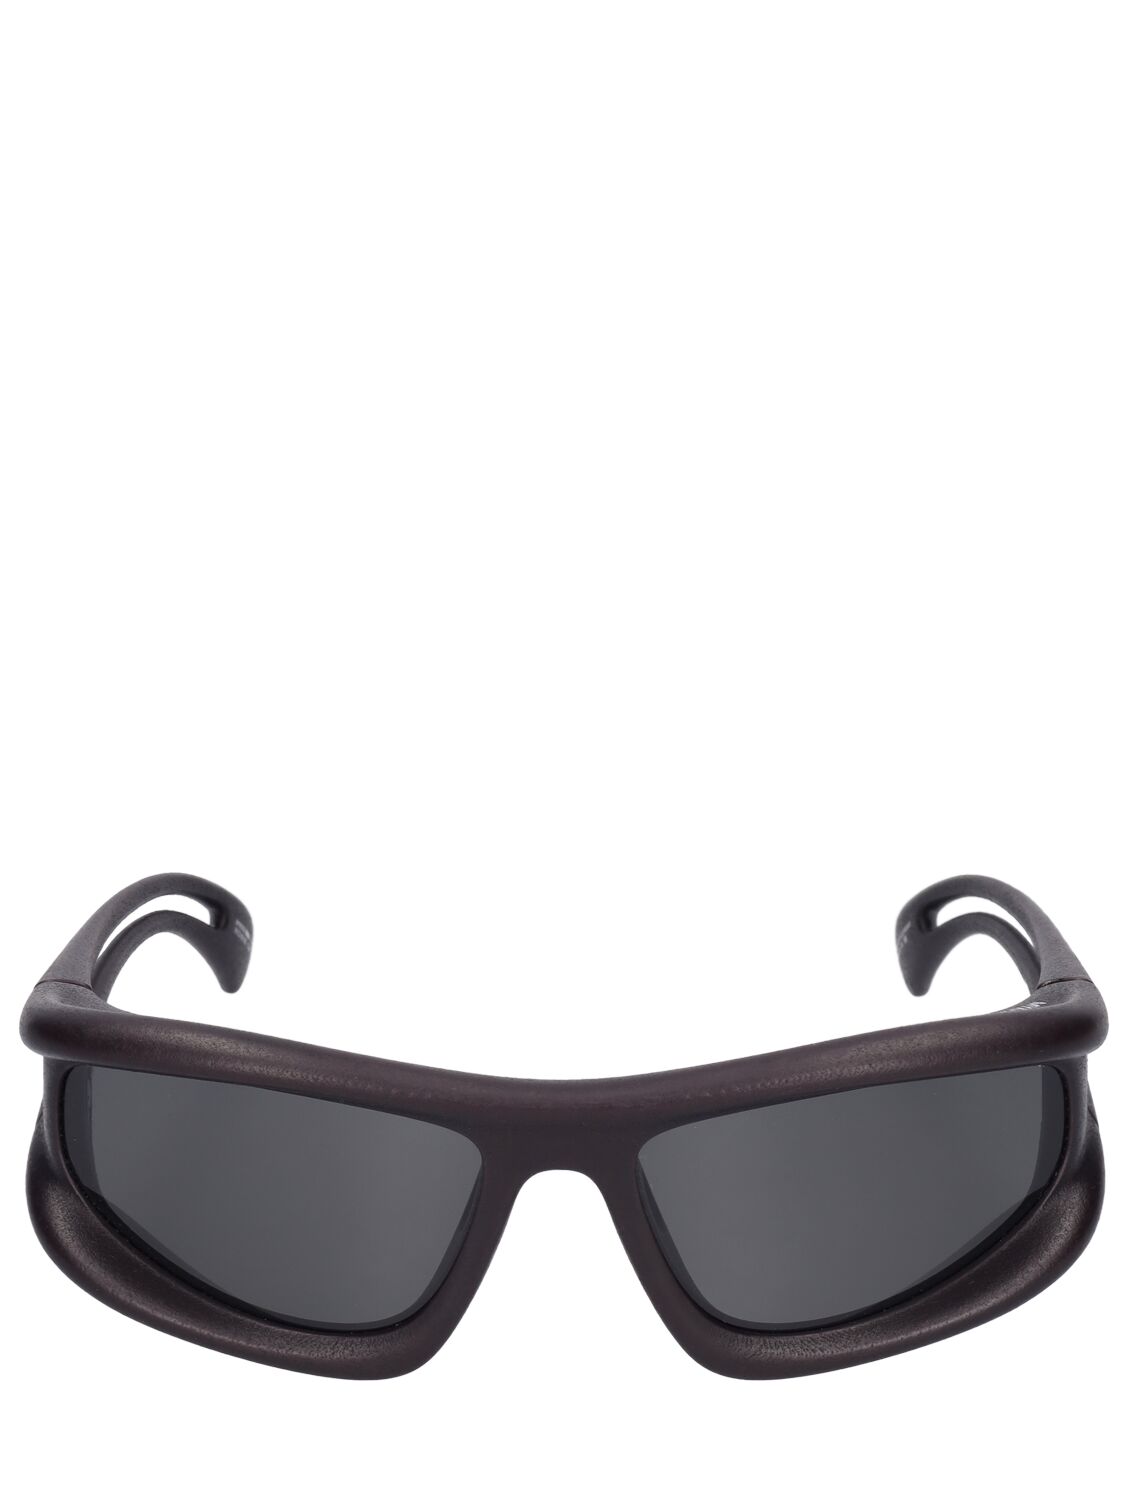 Mykita Marfa 032c Sunglasses In Black